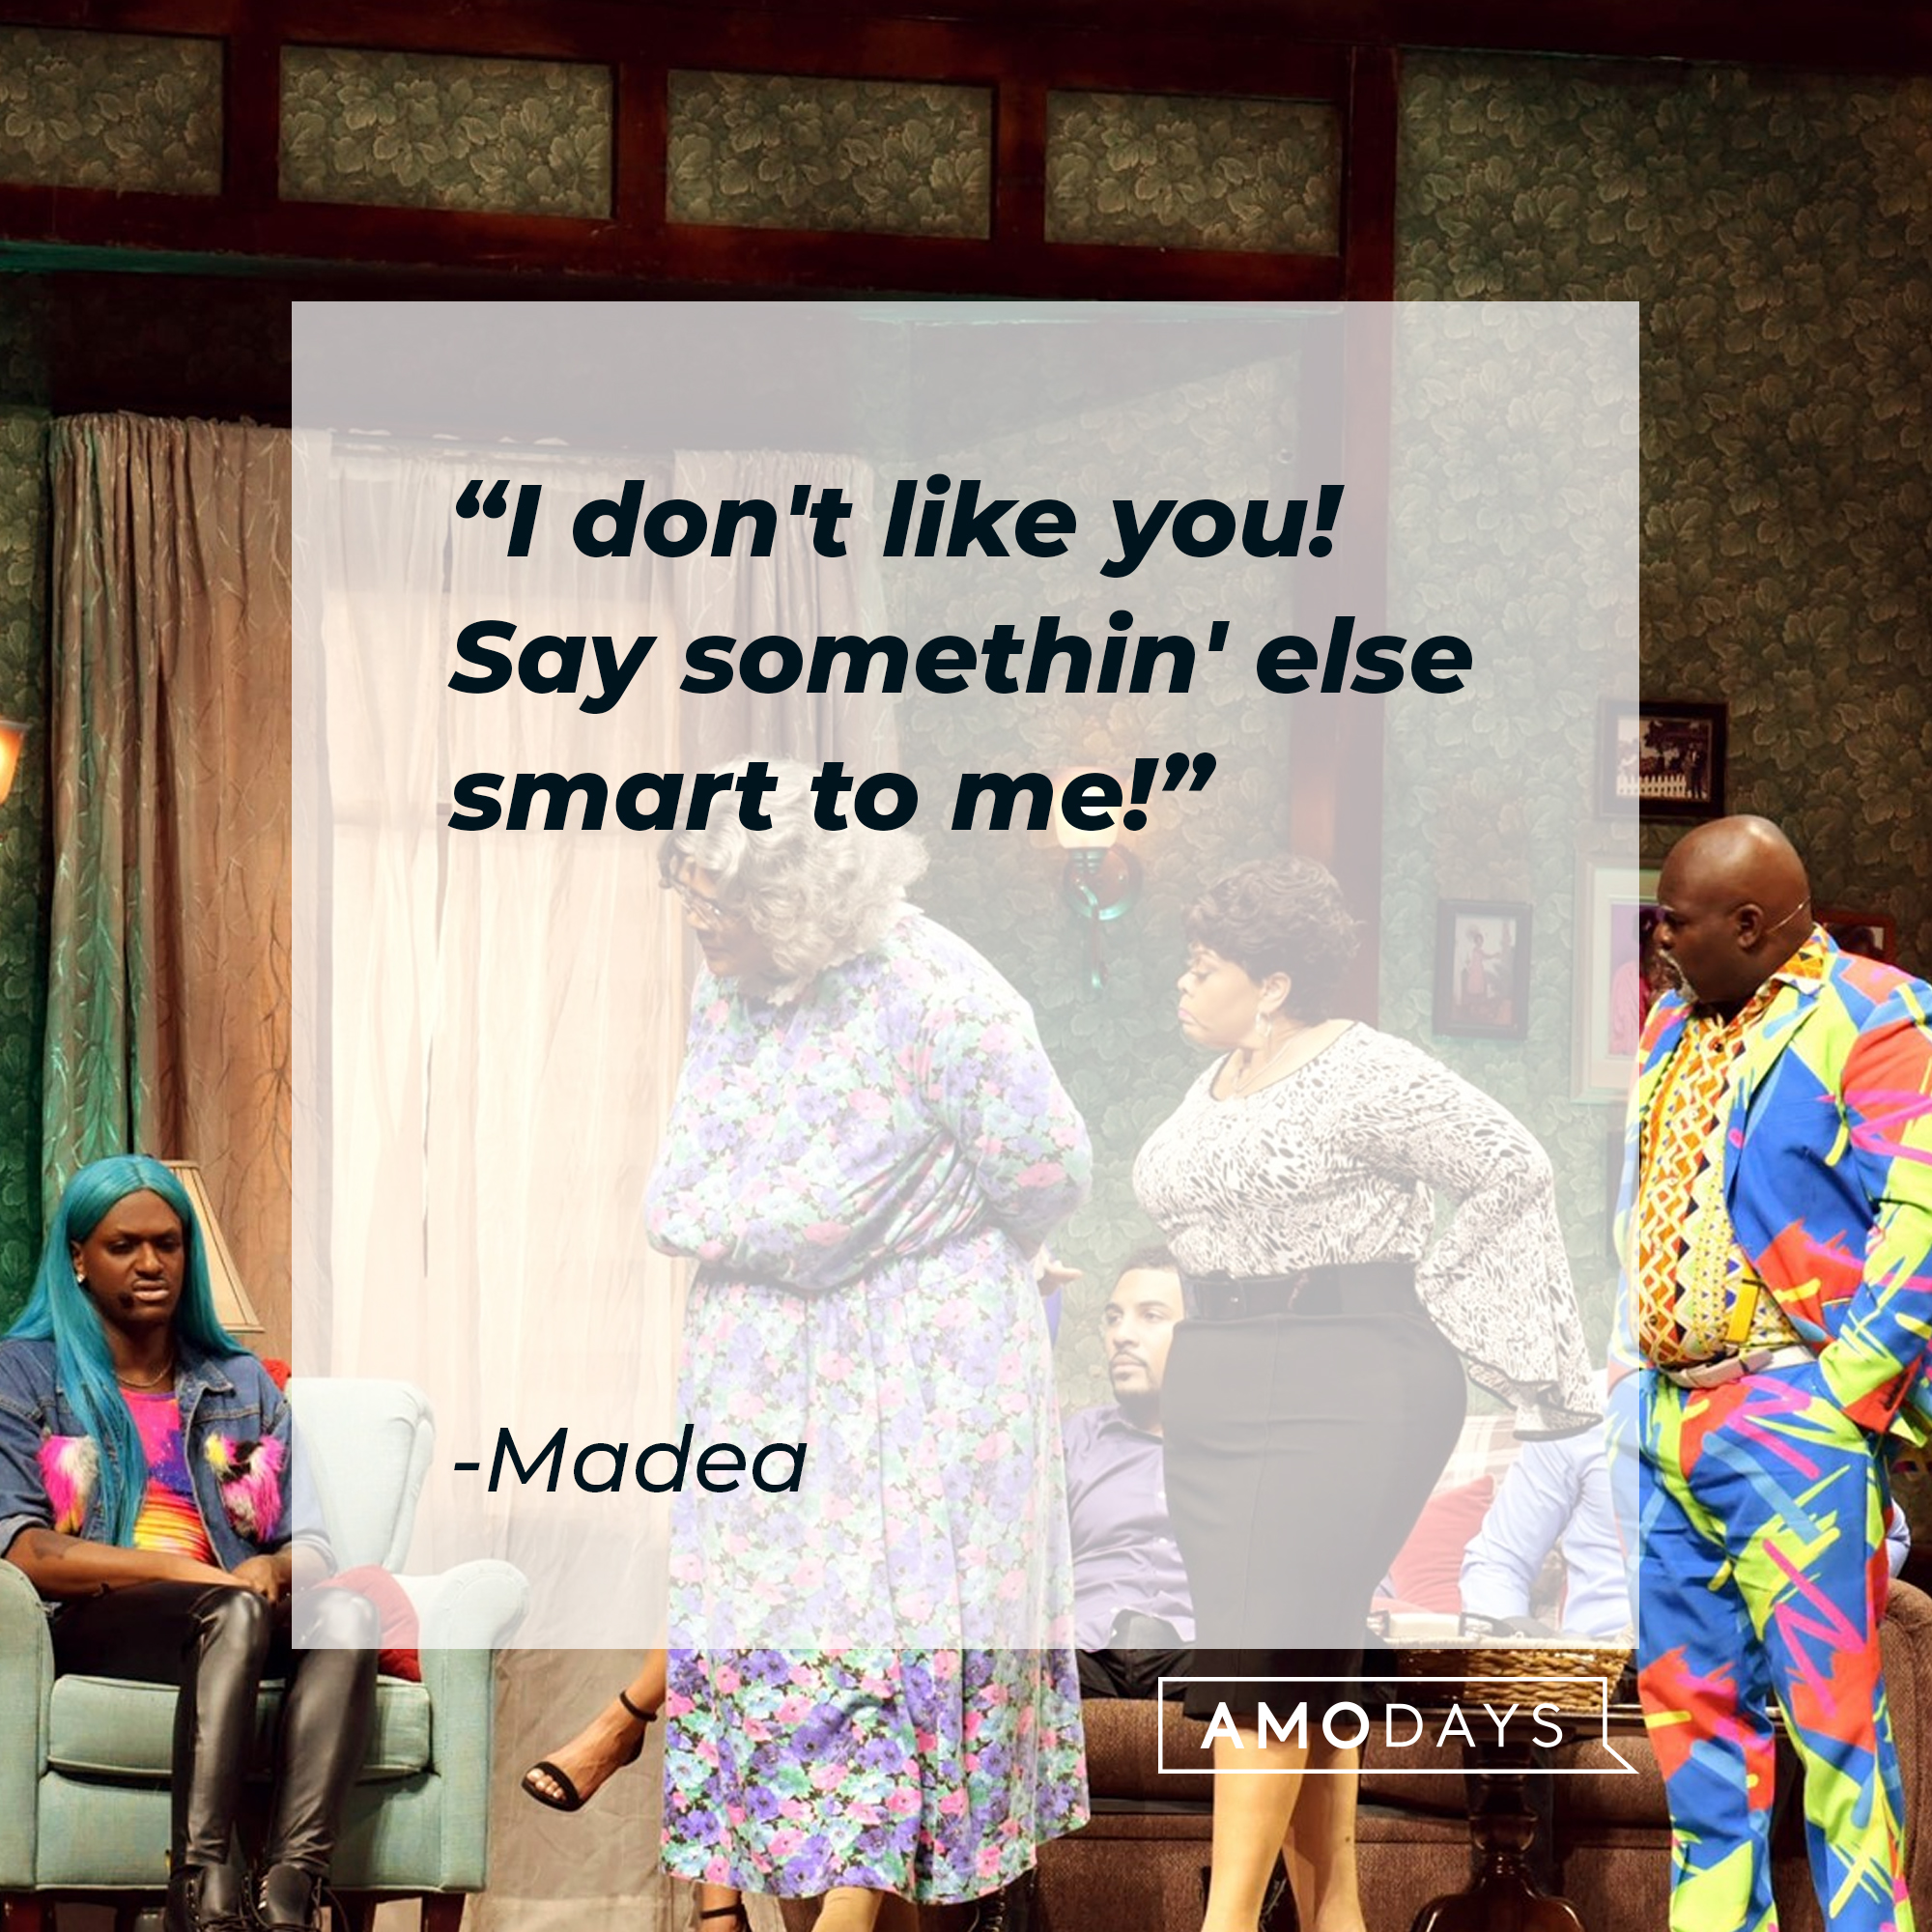 Madea's quote: "I don't like you! Say somethin' else smart to me!" | Source: Facebook.com/madea